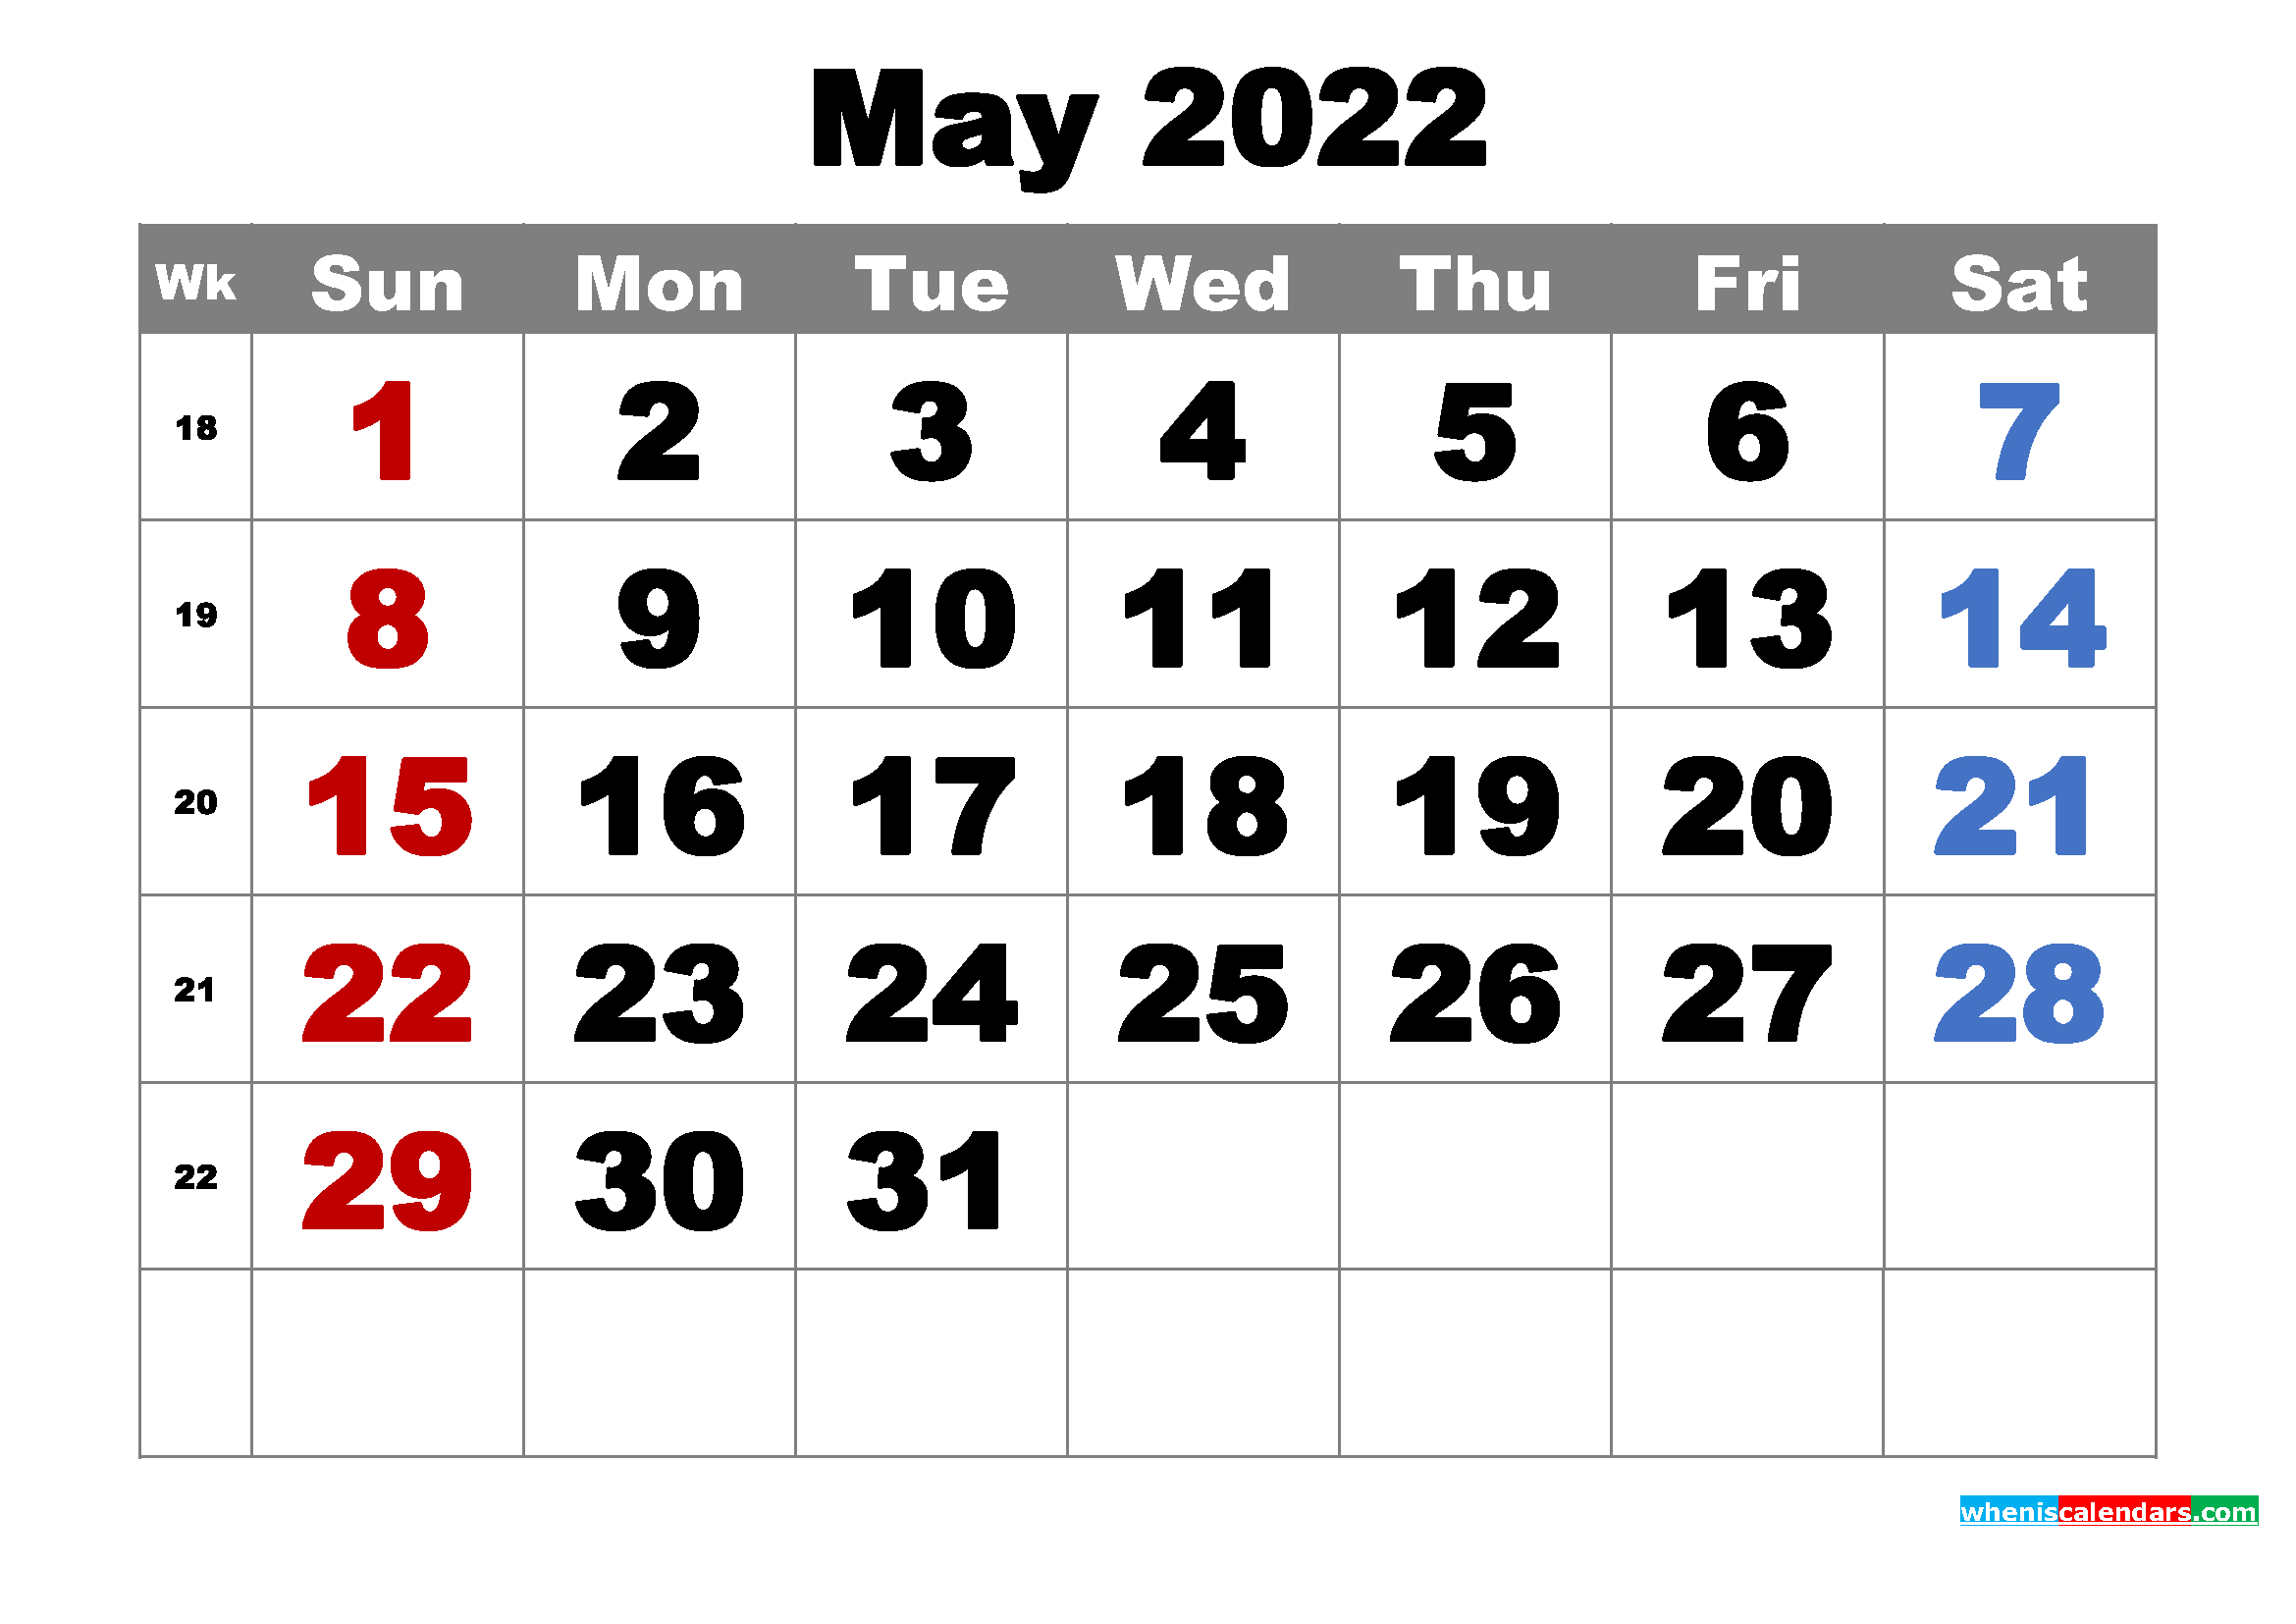 Free Printable May 2022 Calendar Word, Pdf, Image